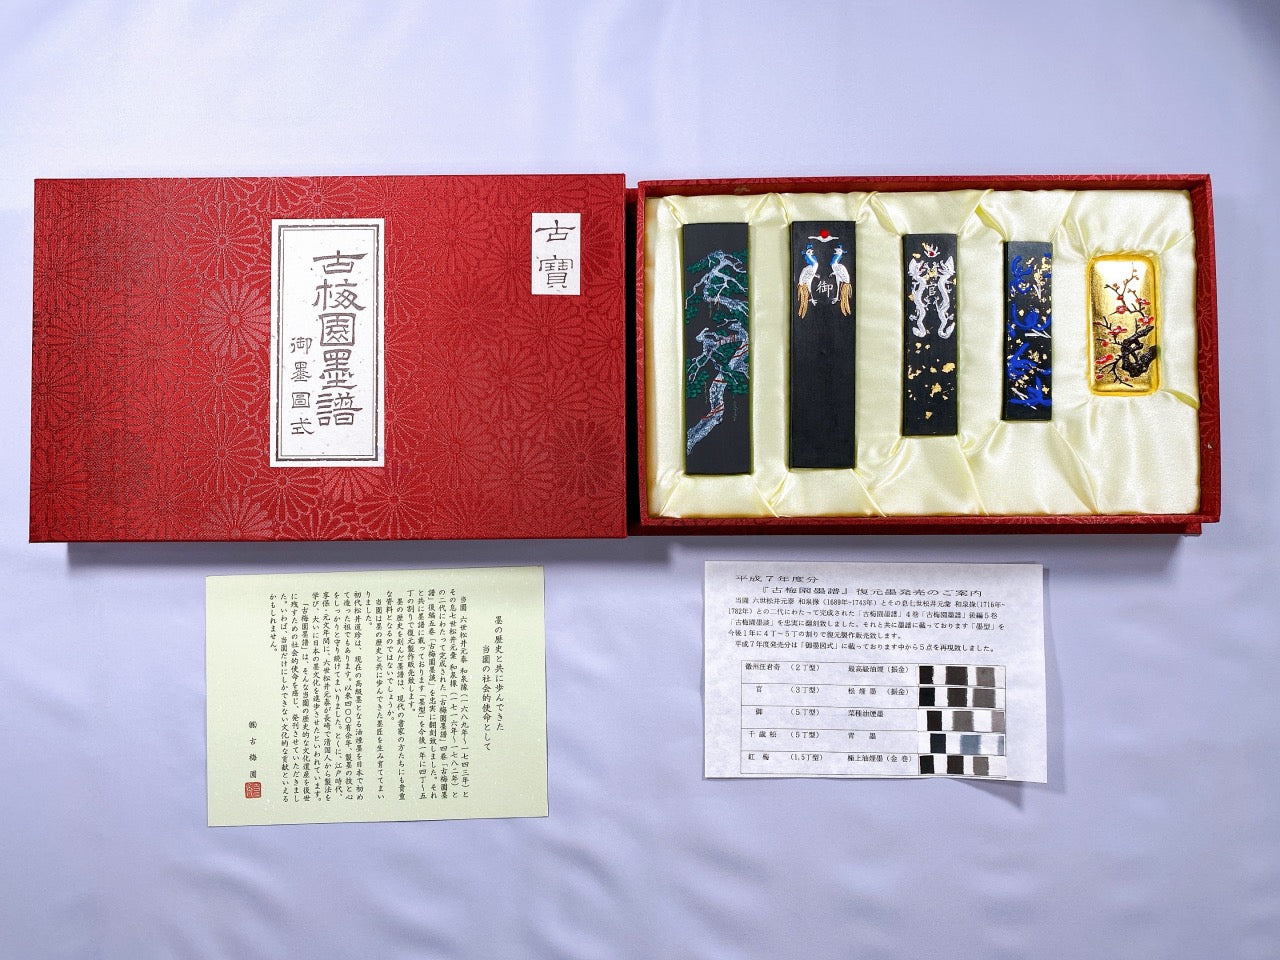 Bokufu 1995 - Kobaien's special inkstick year selection ( 古梅園墨譜1995 )